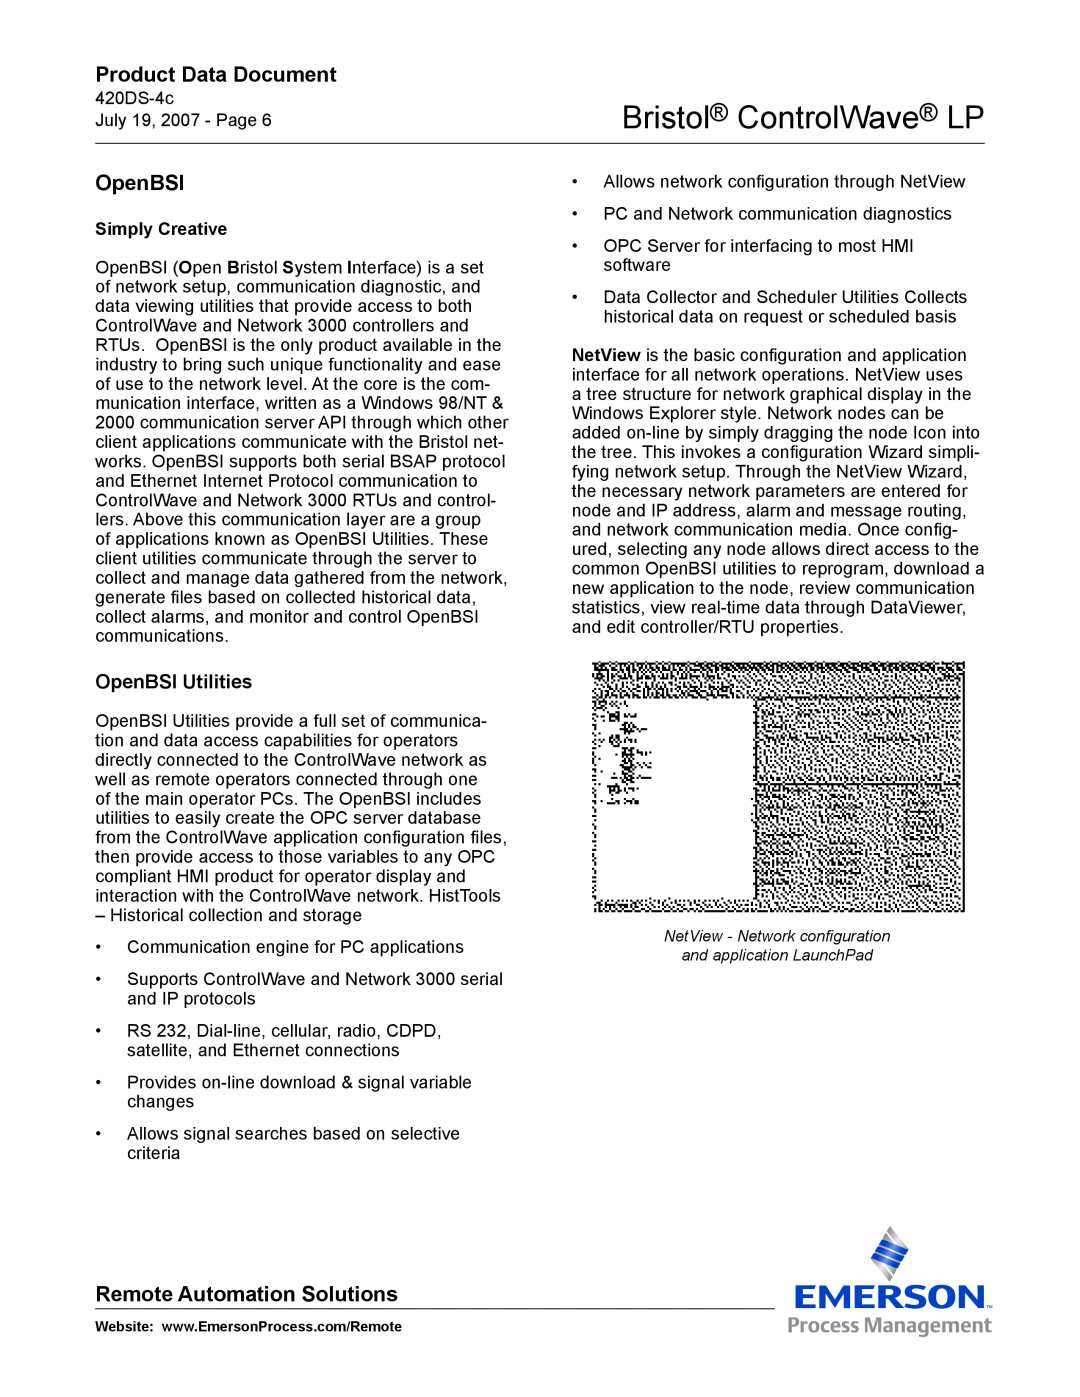 Emerson Process Management manual OpenBSI Utilities, Simply Creative, Bristol ControlWave LP, Product Data Document 